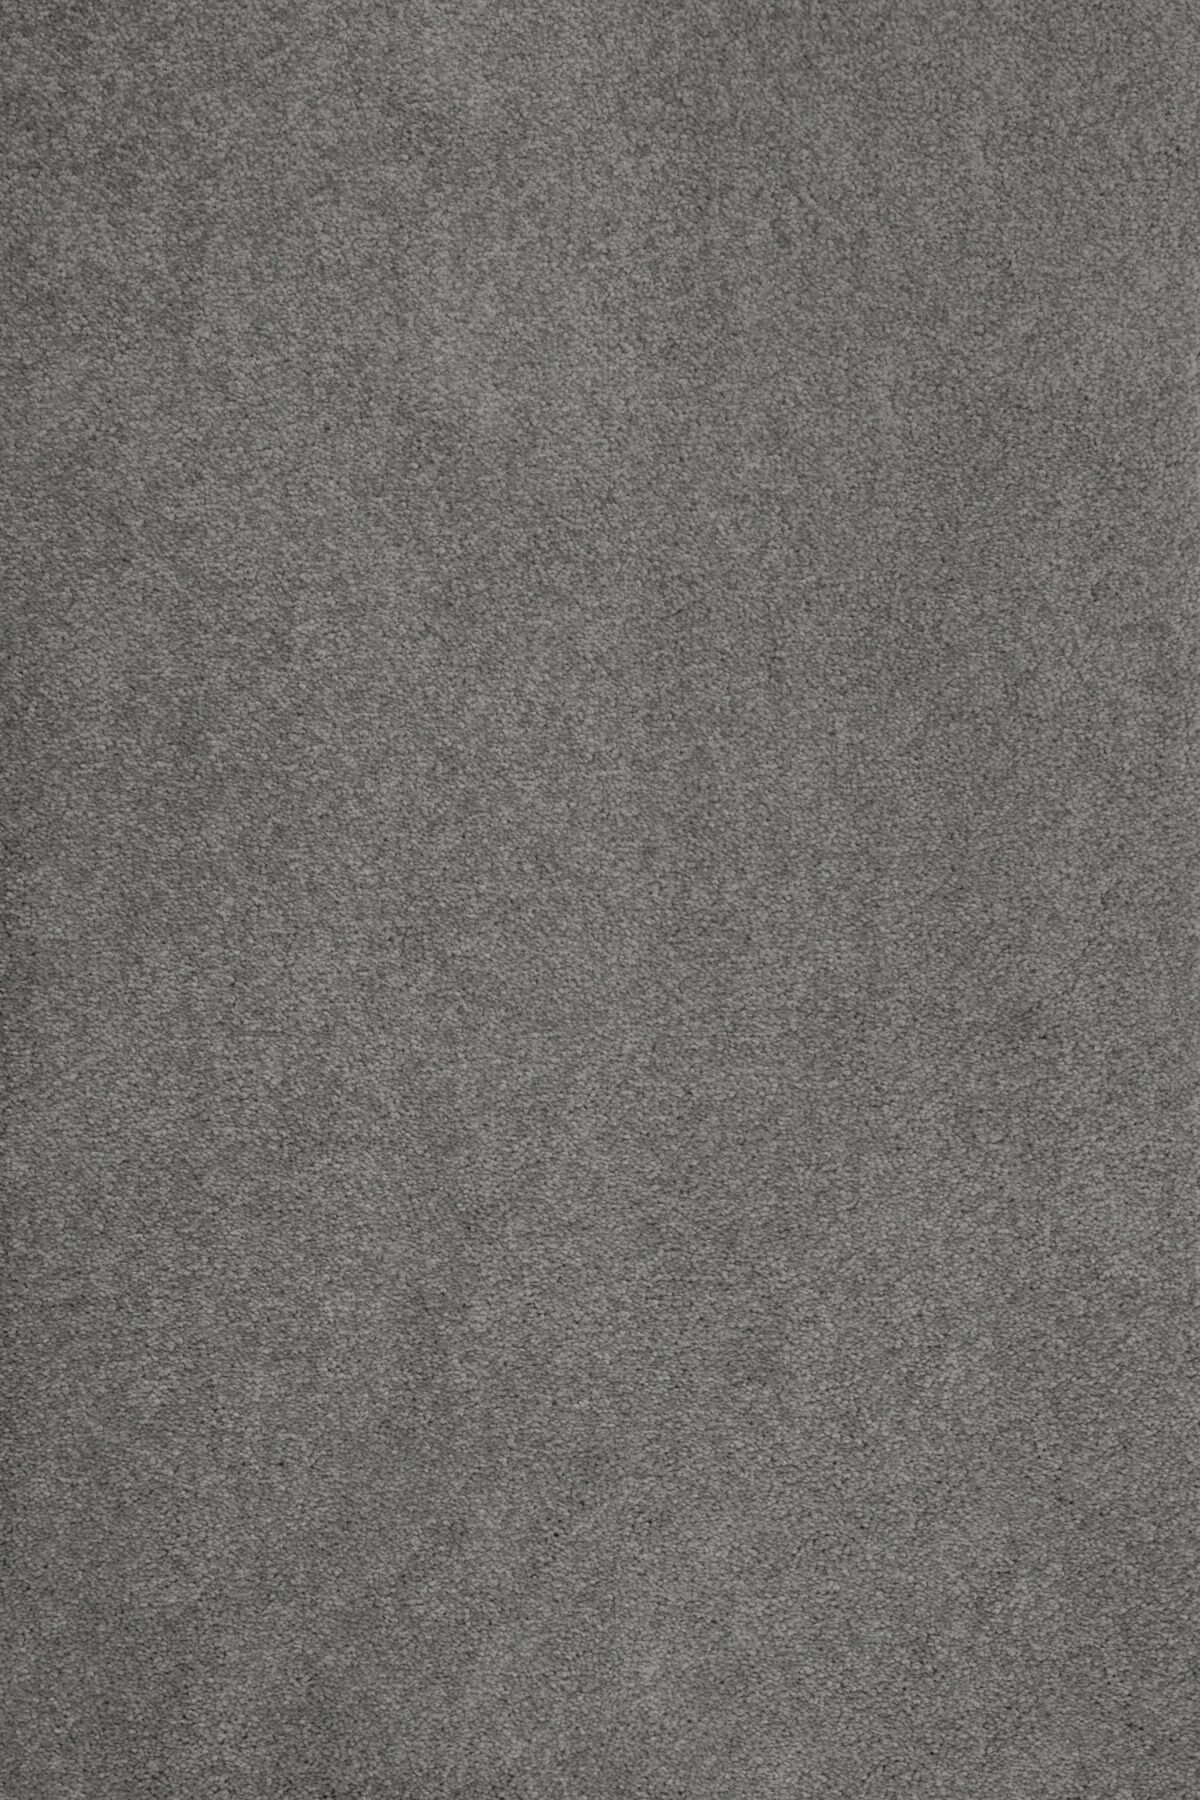 Sedna Teppichboden »Proteus«, rechteckig, 12 mm Höhe grau